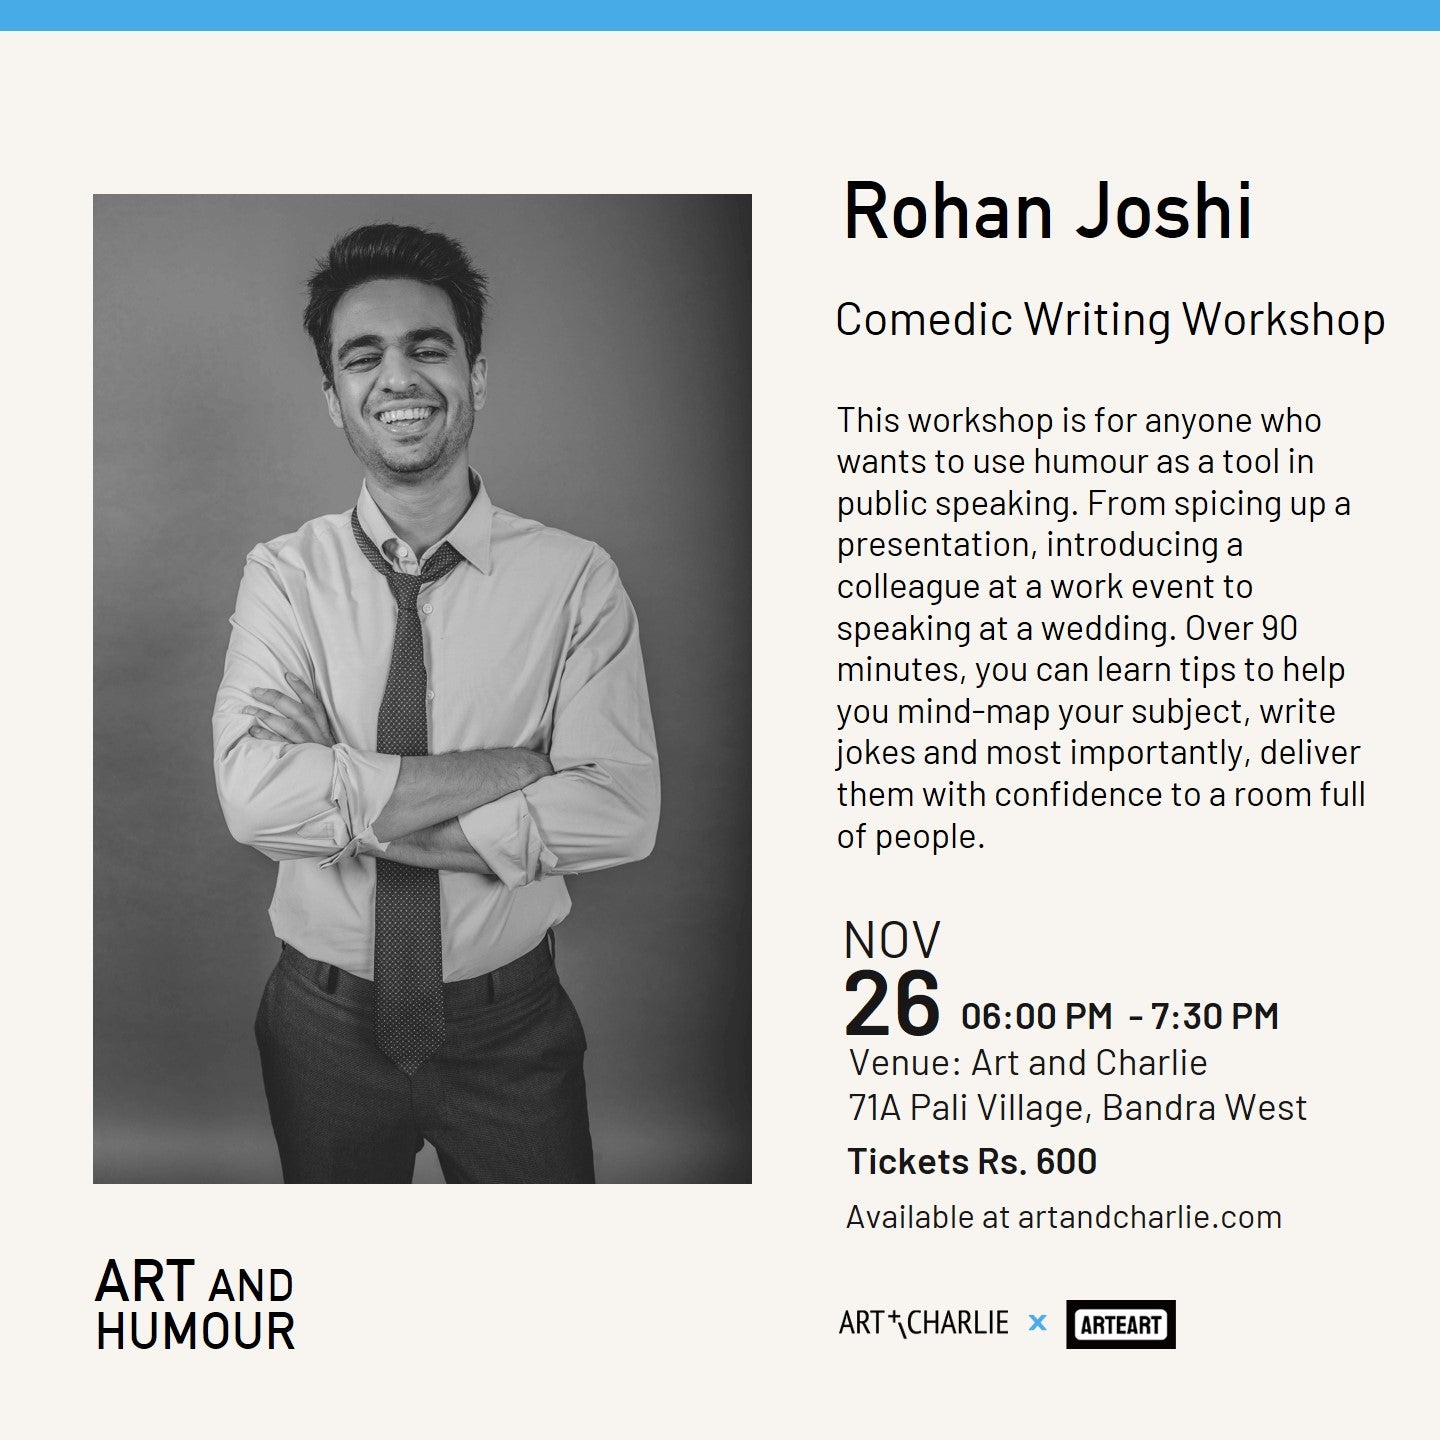 Ticket - Art and Humour: Comedic Writing Workshop - Rohan Joshi - Nov 26 2022 - 6 PM - 7:30 PM